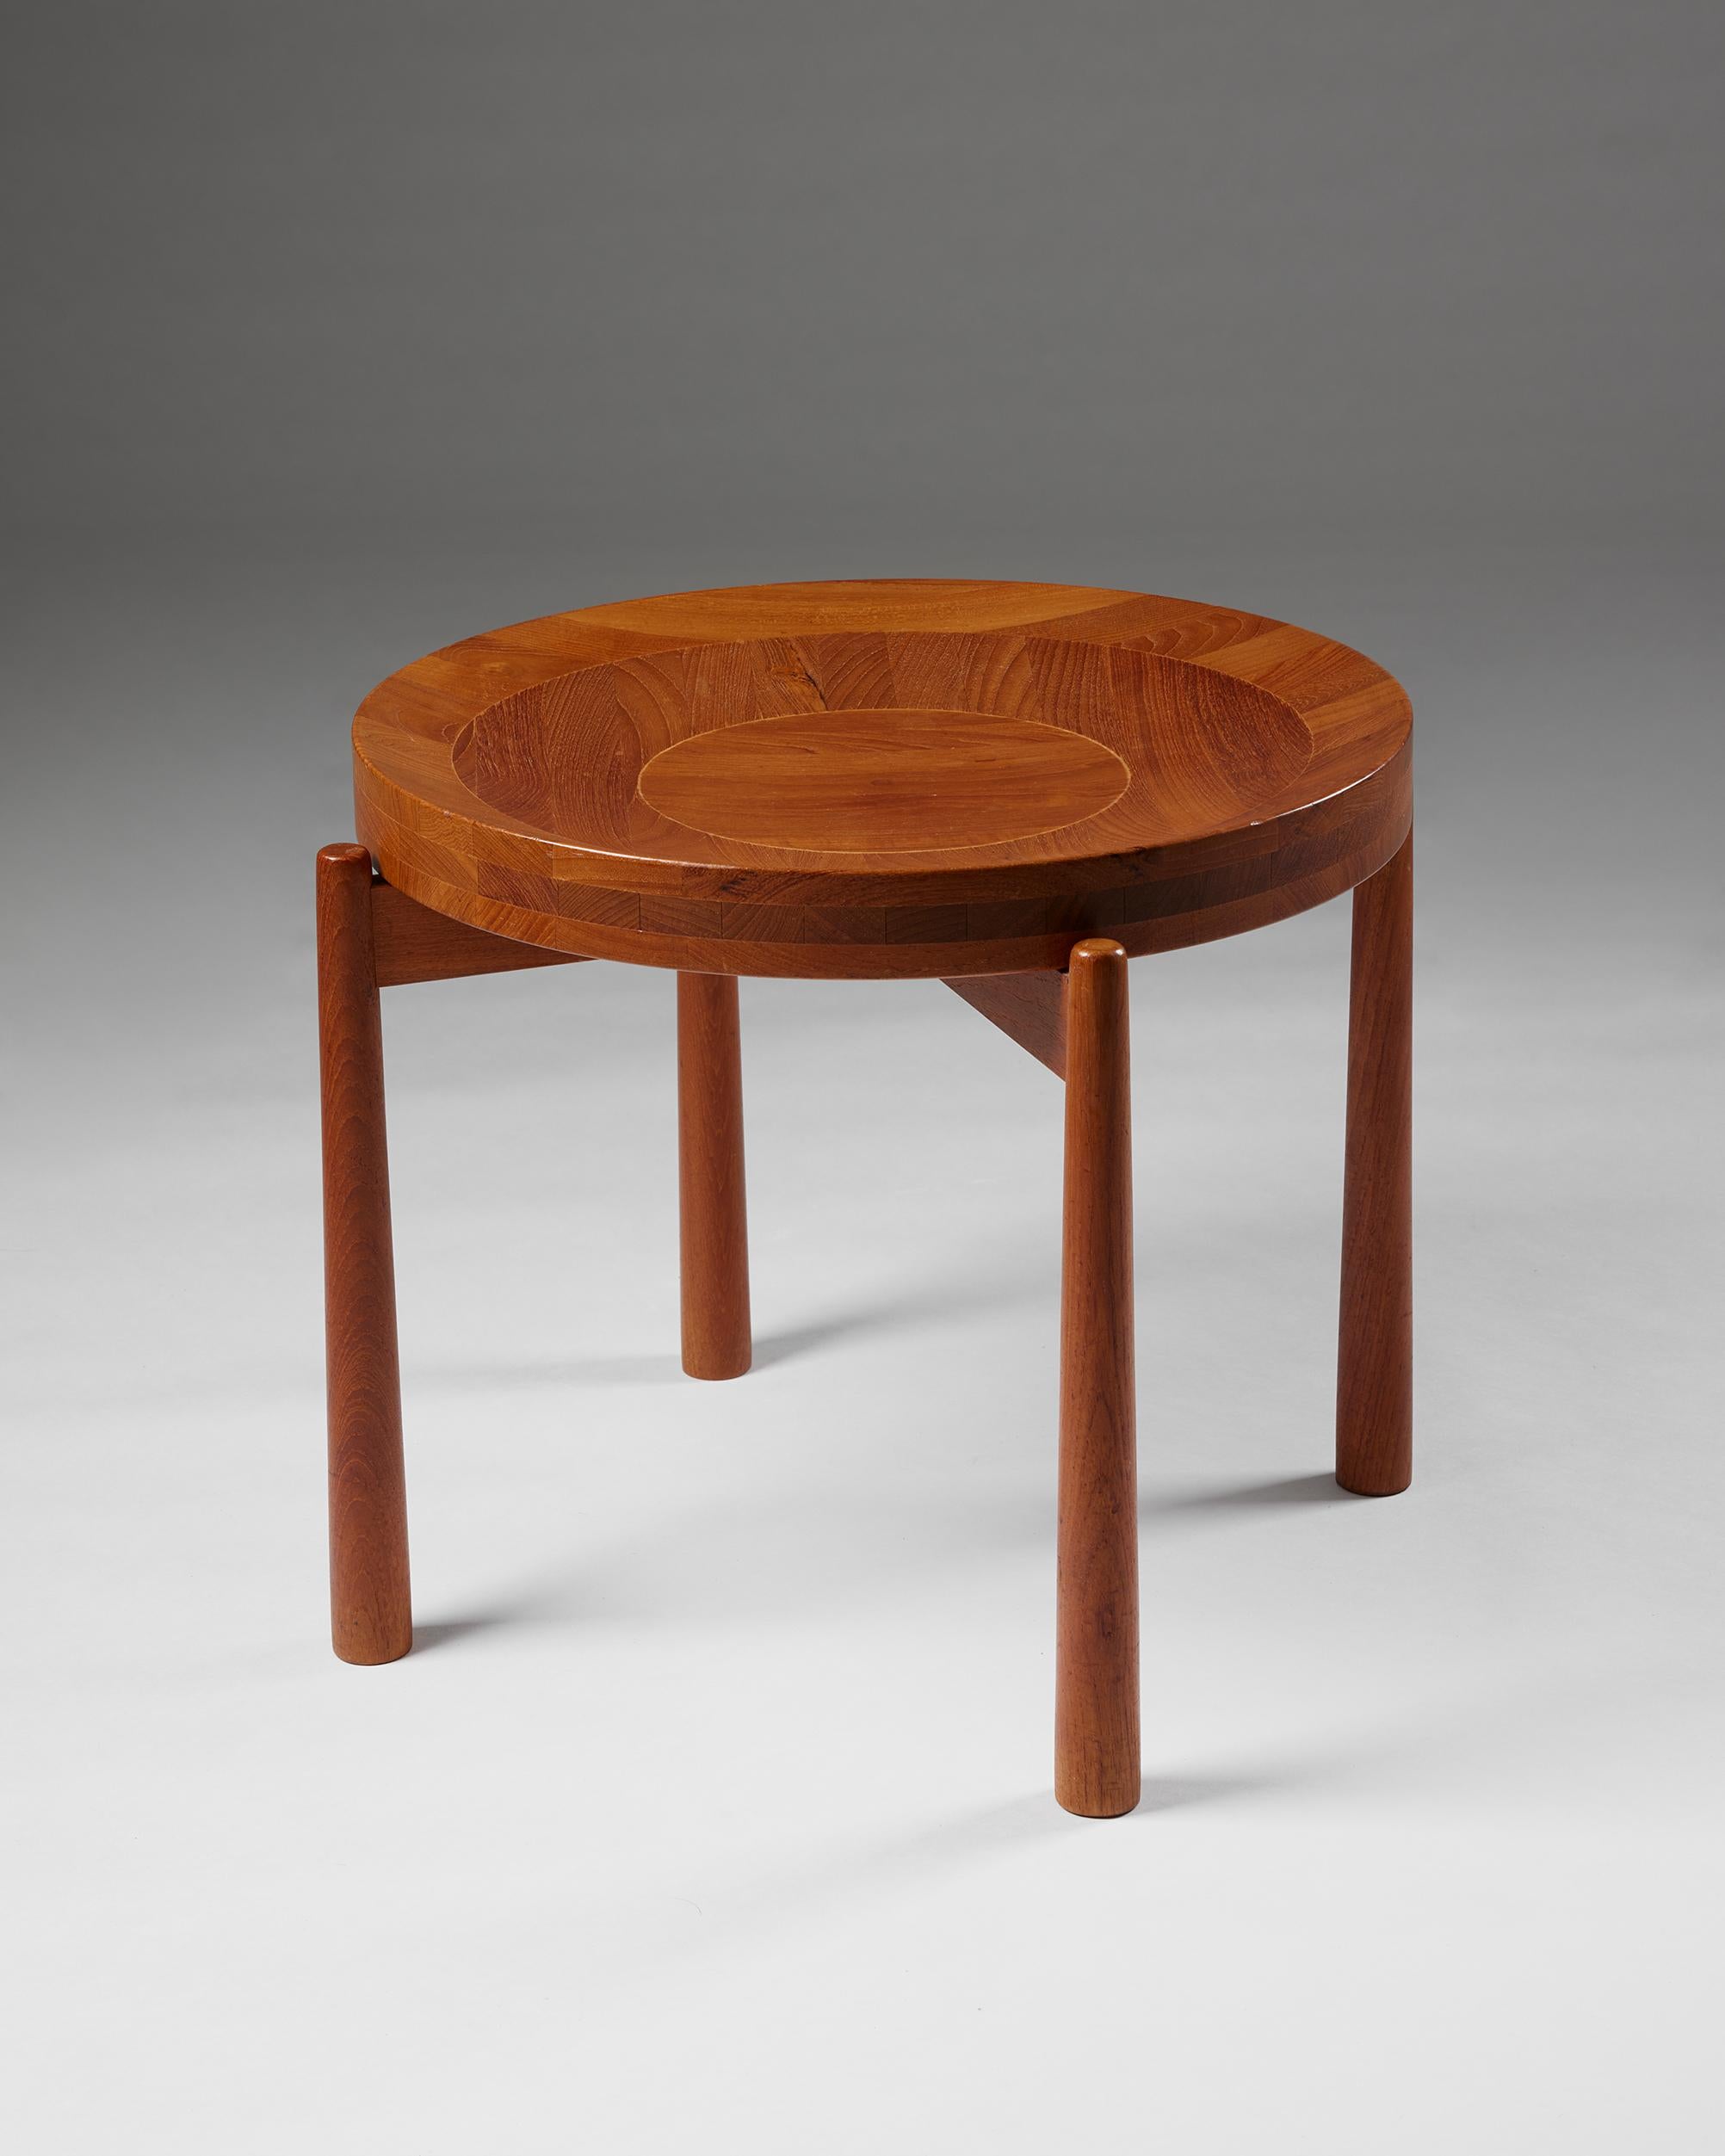 Side table designed by Jens Quistgaard, Denmark. 1950s

Teak.